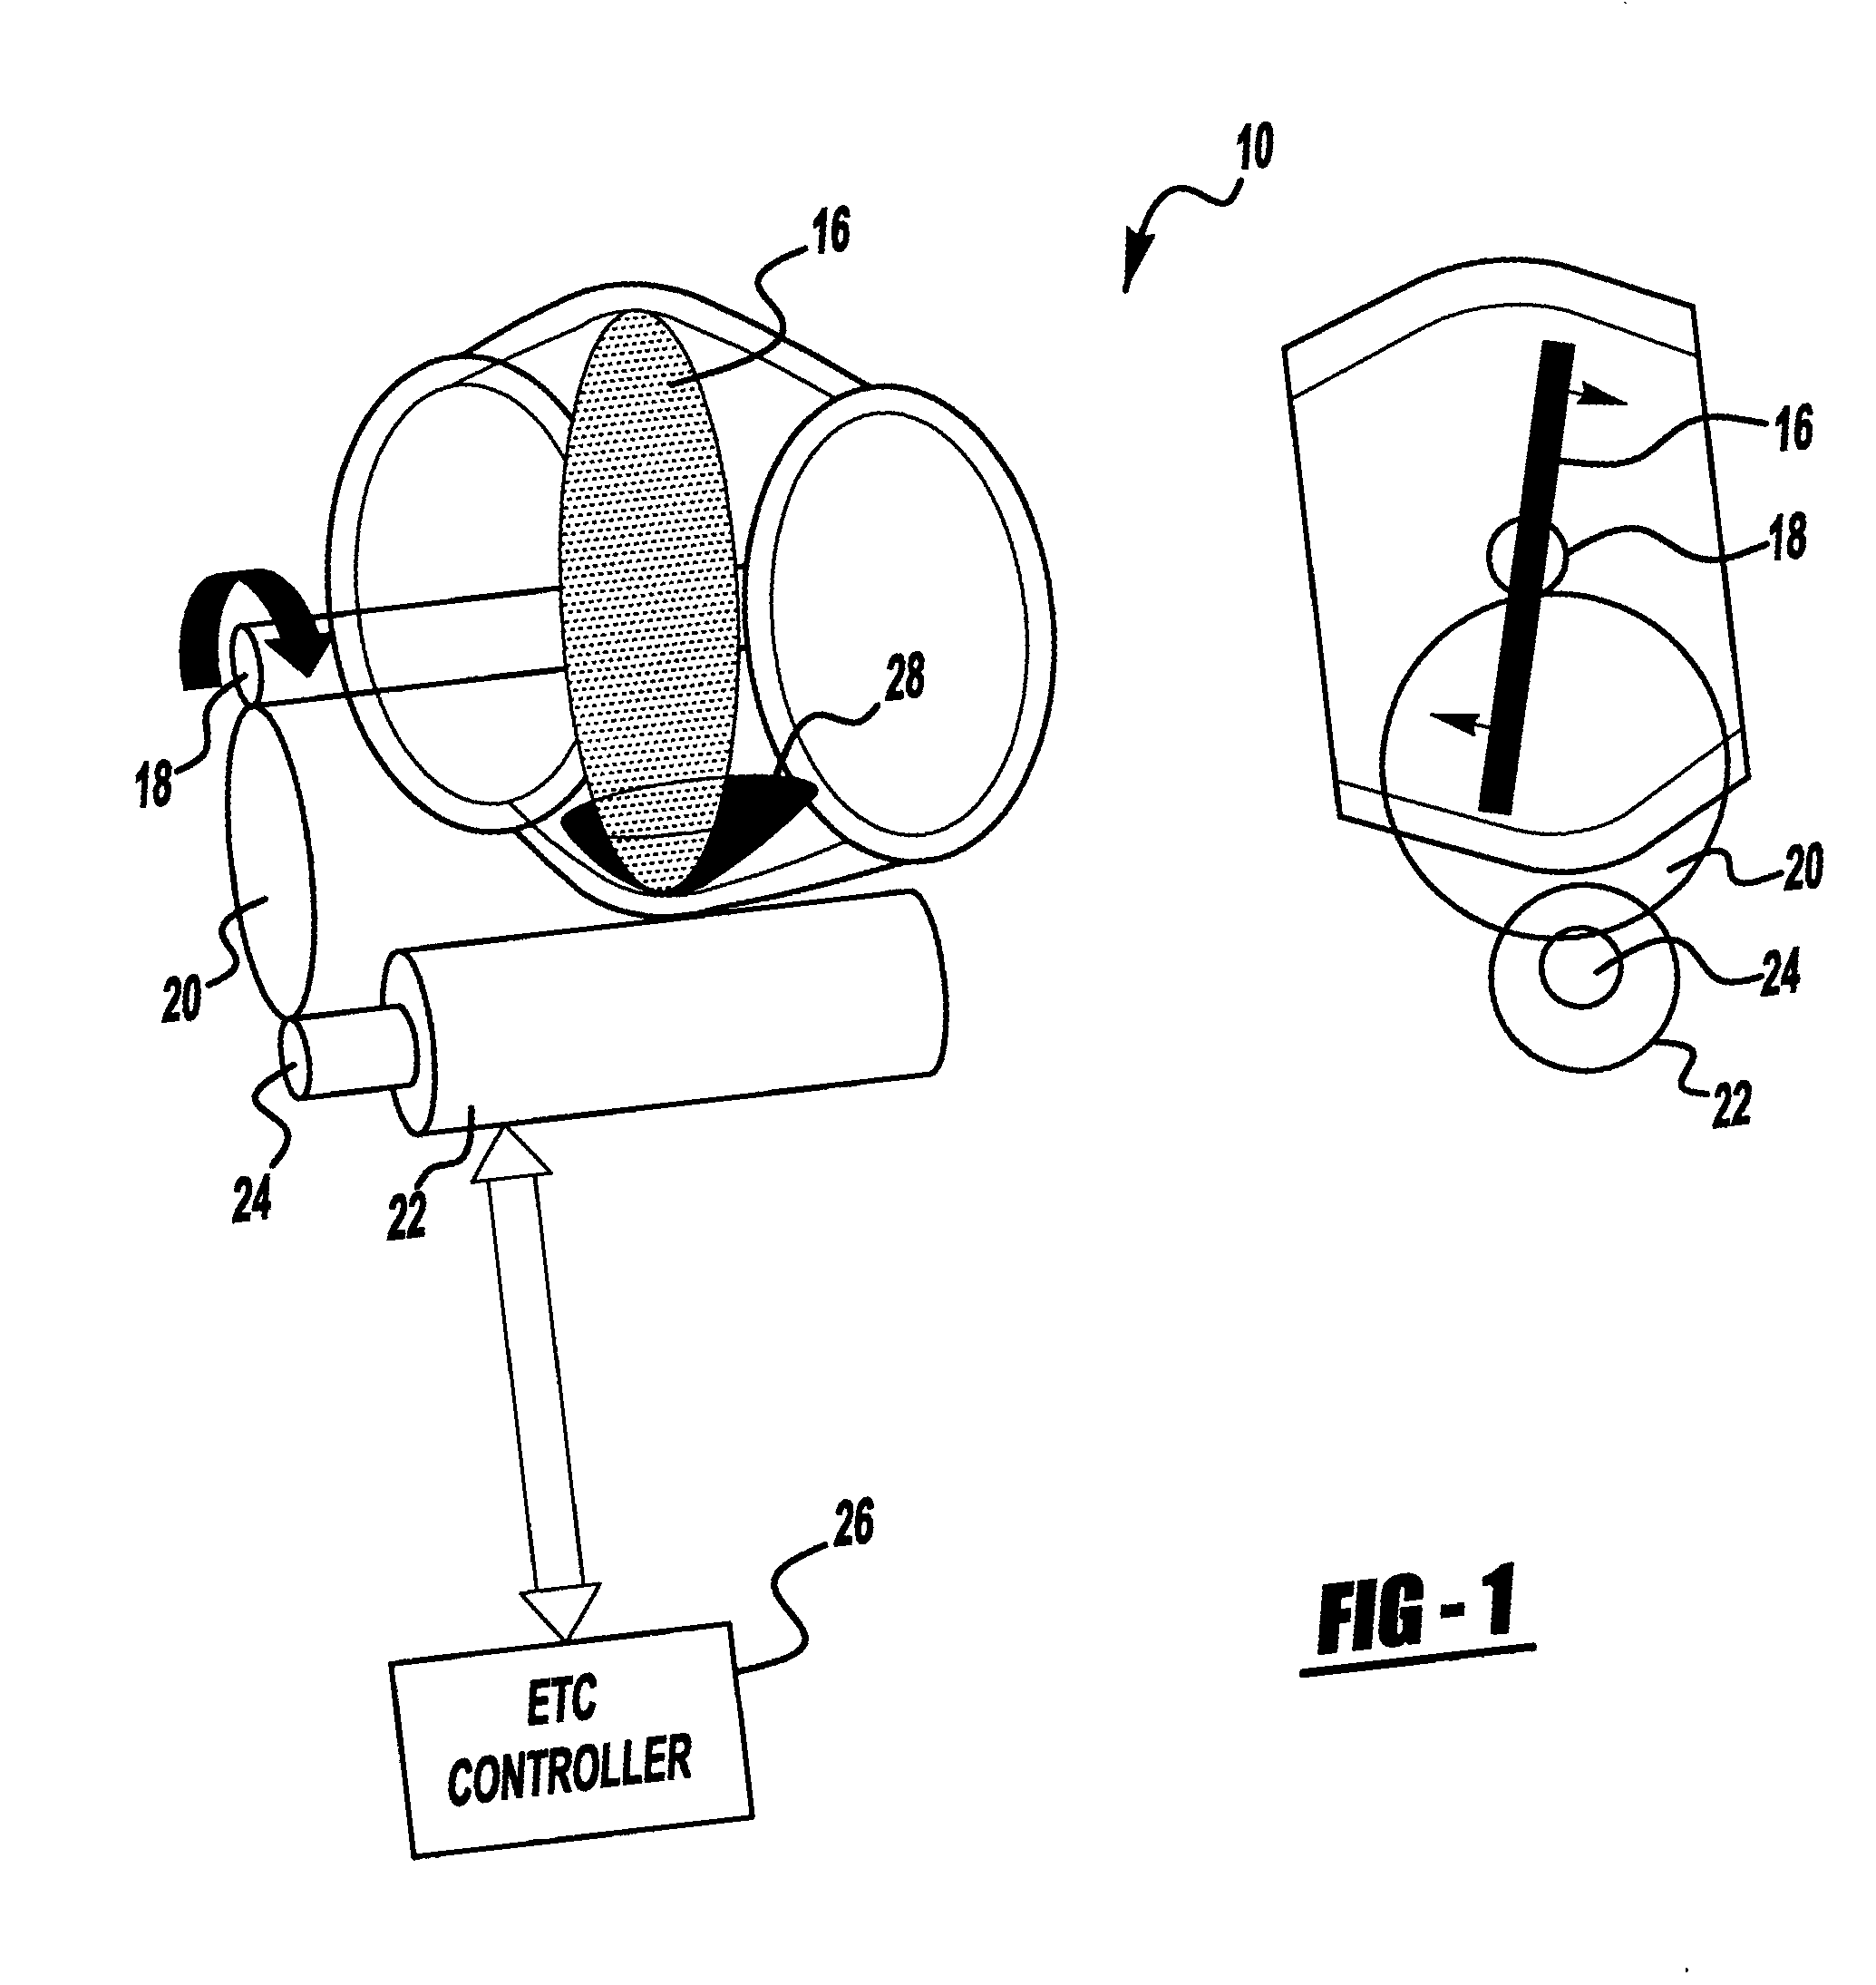 Electronic throttle ice break method and apparatus